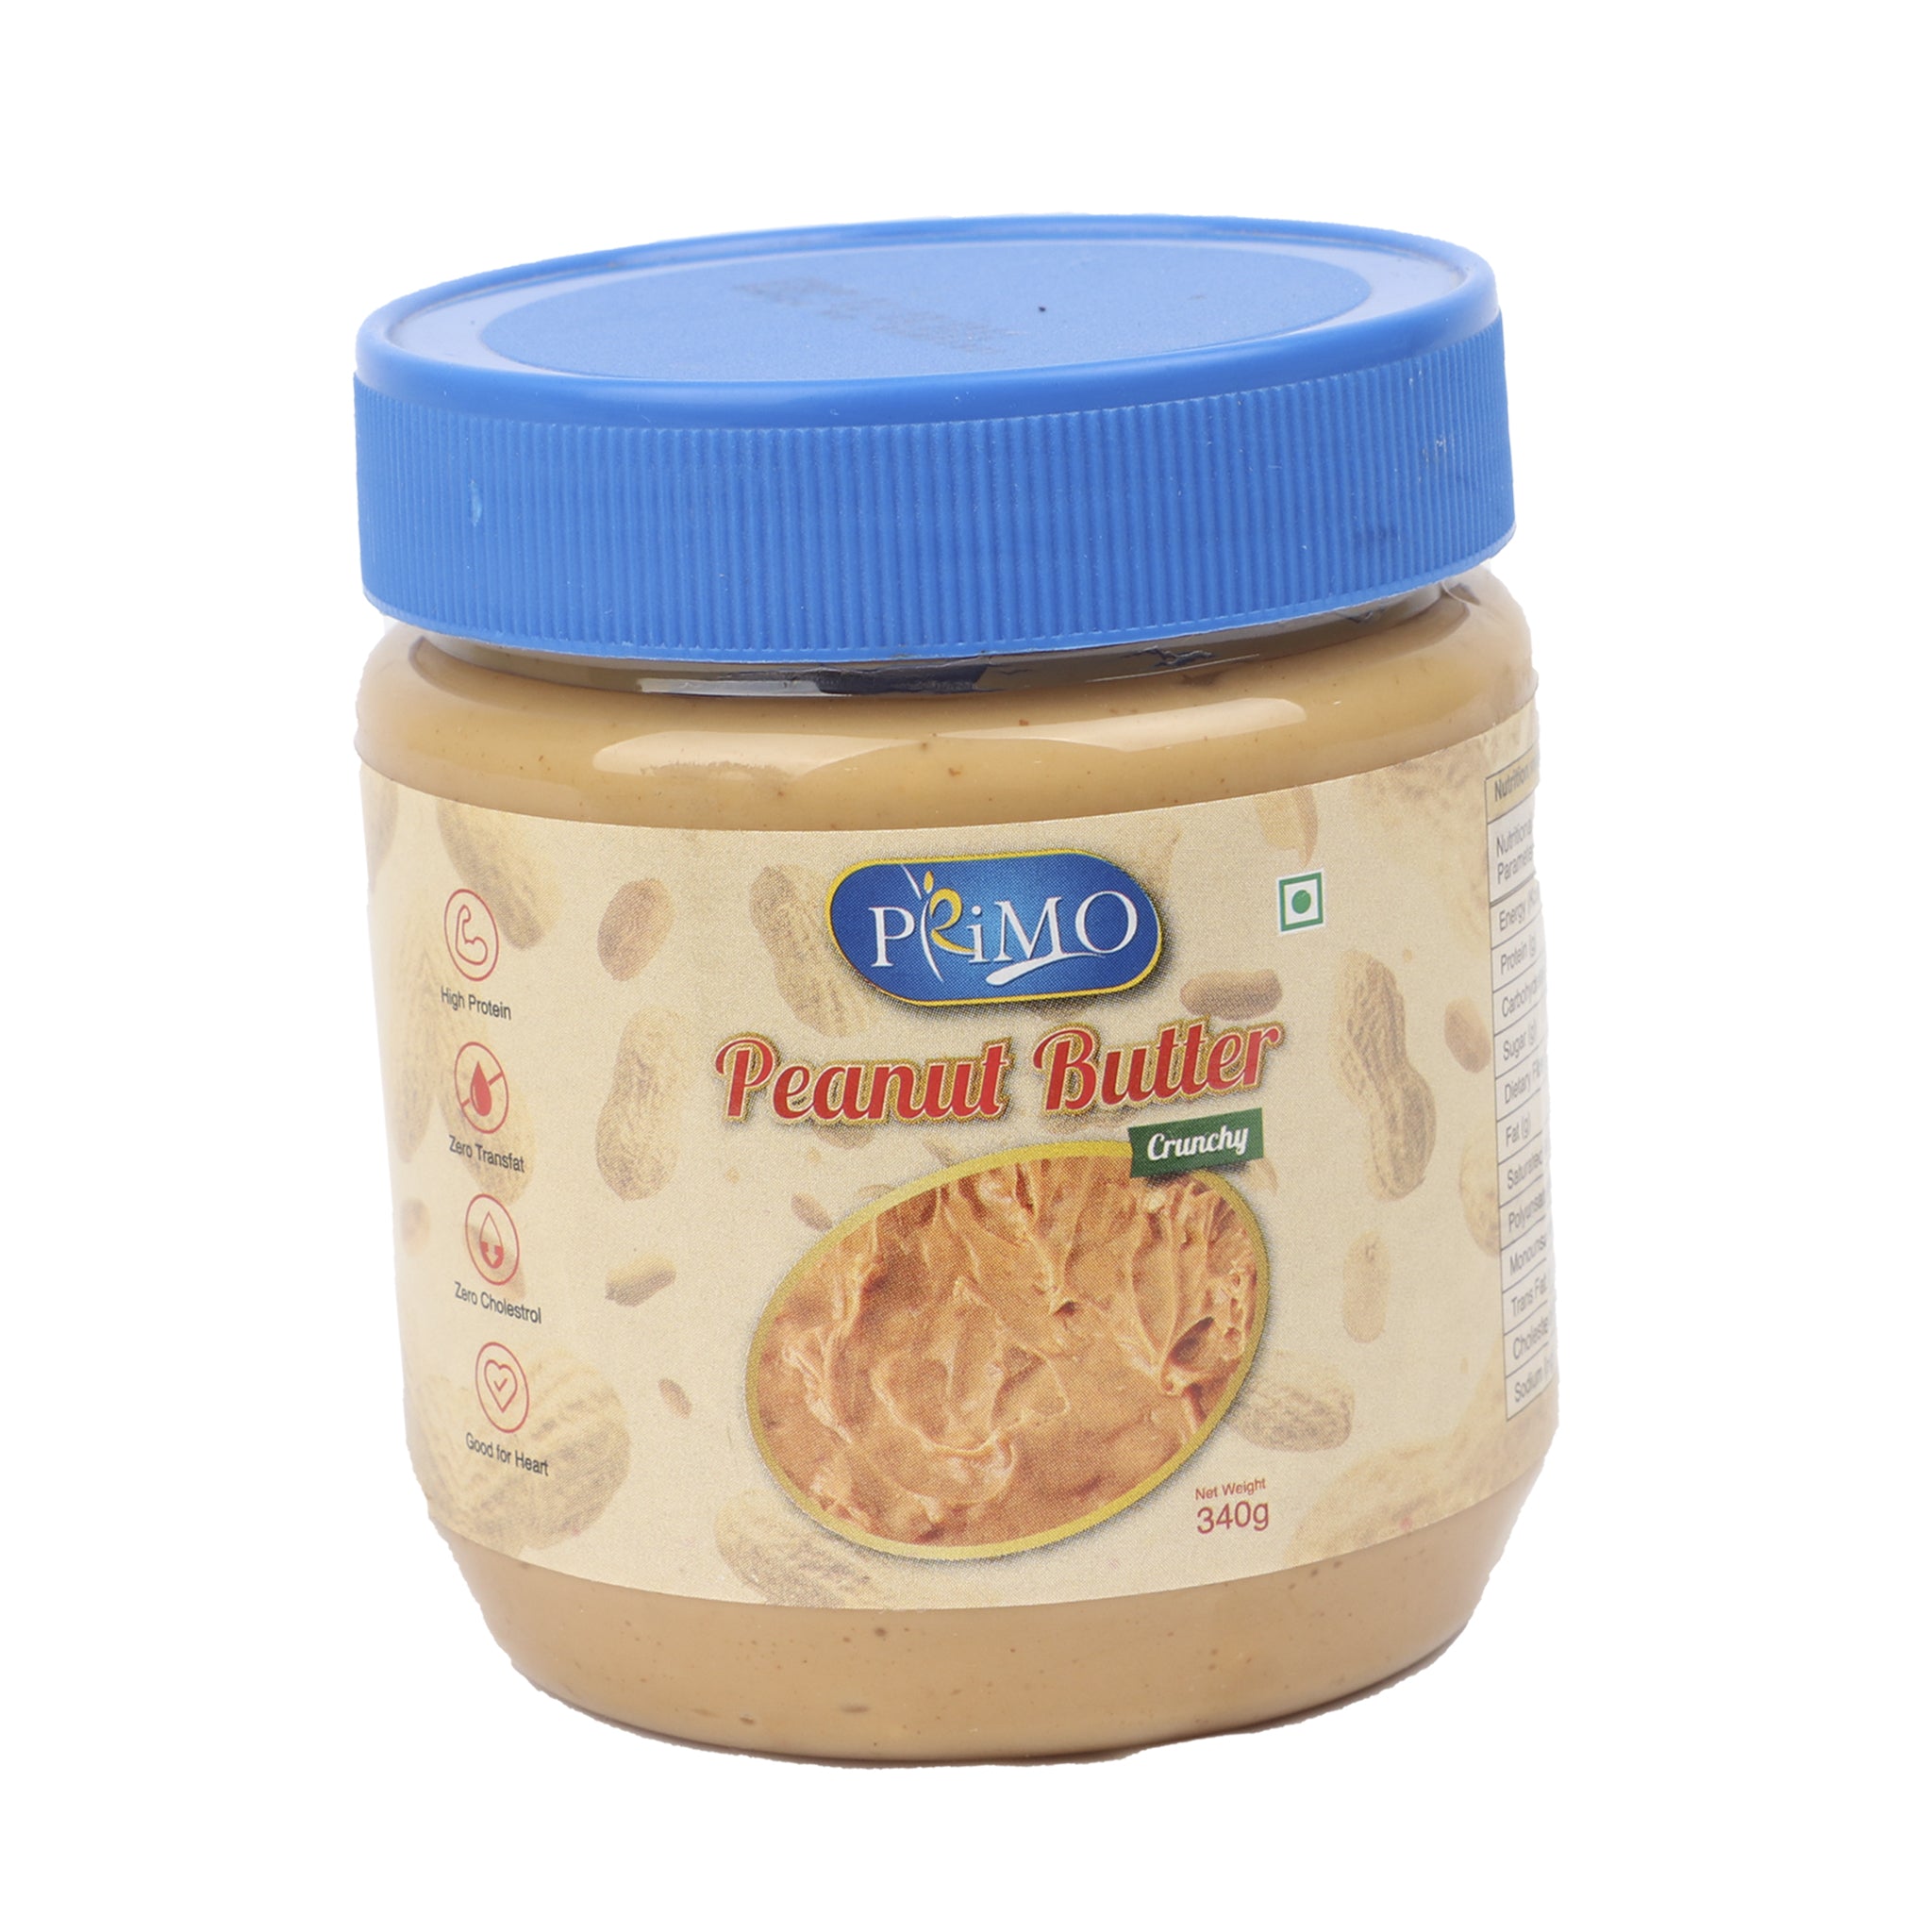 Primo Peanut Butter Crunchy 340G